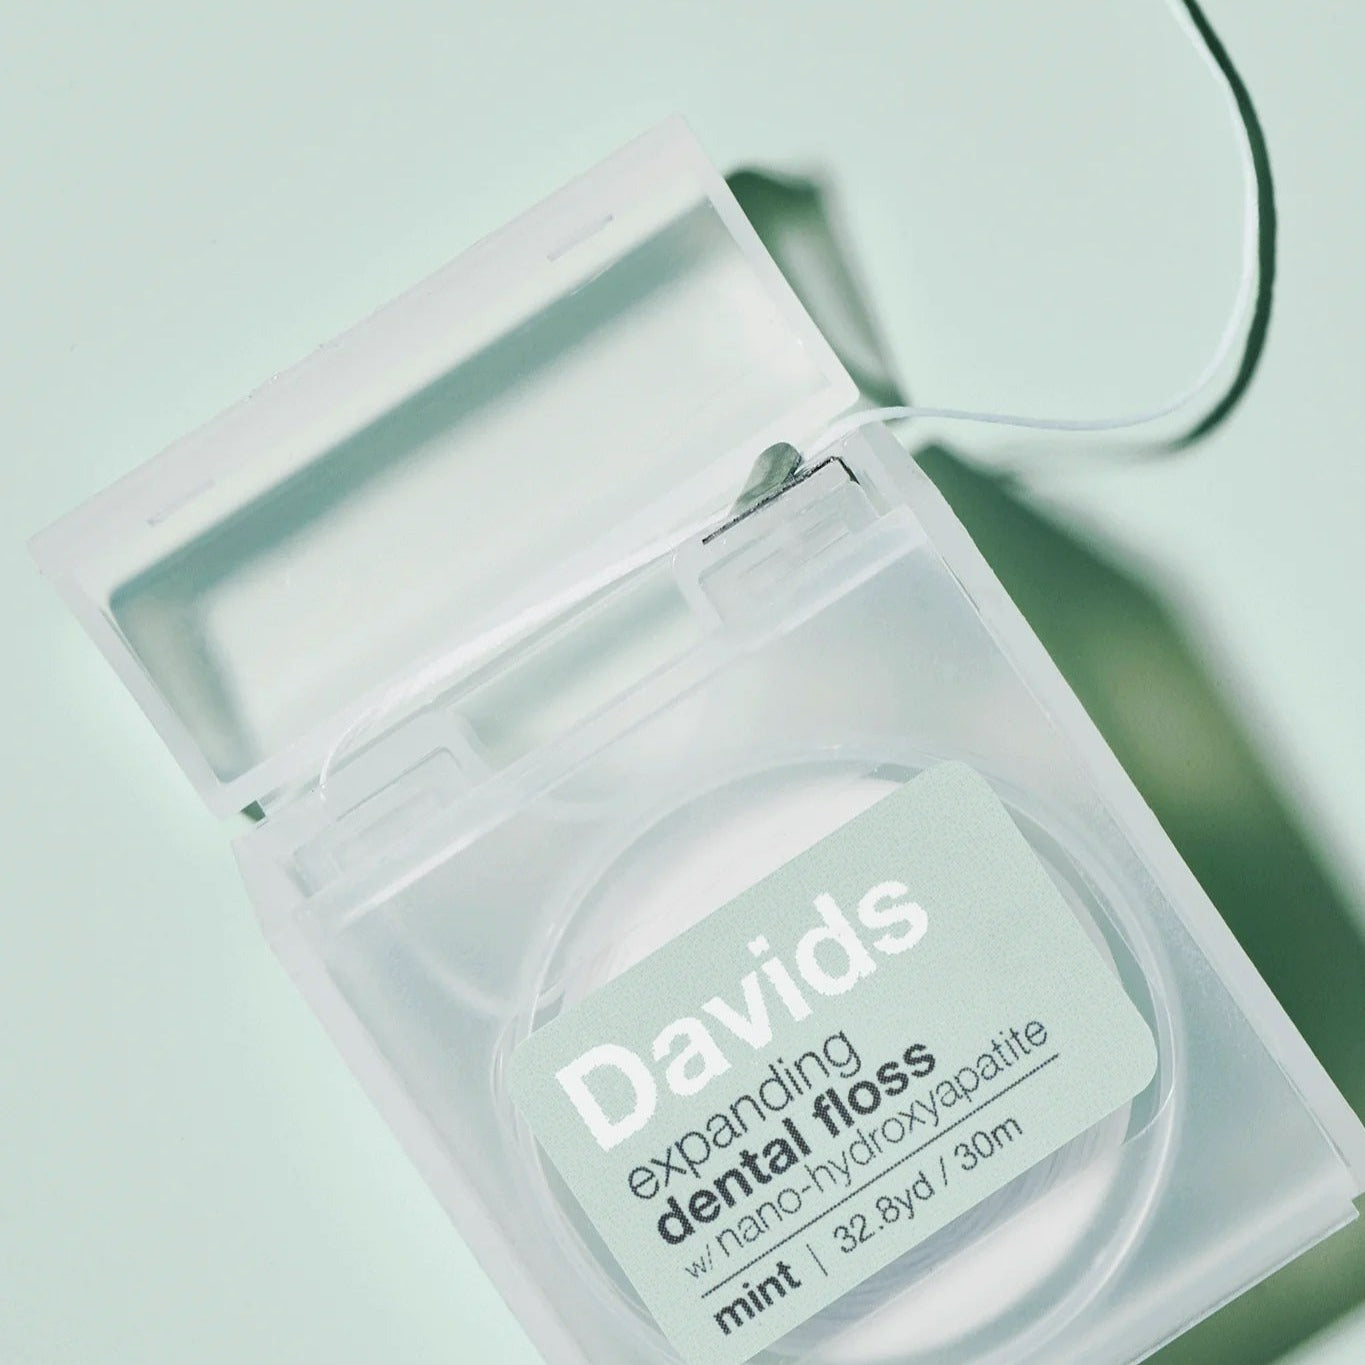 Davids Premium Dental Floss (30m) Refill (30m)